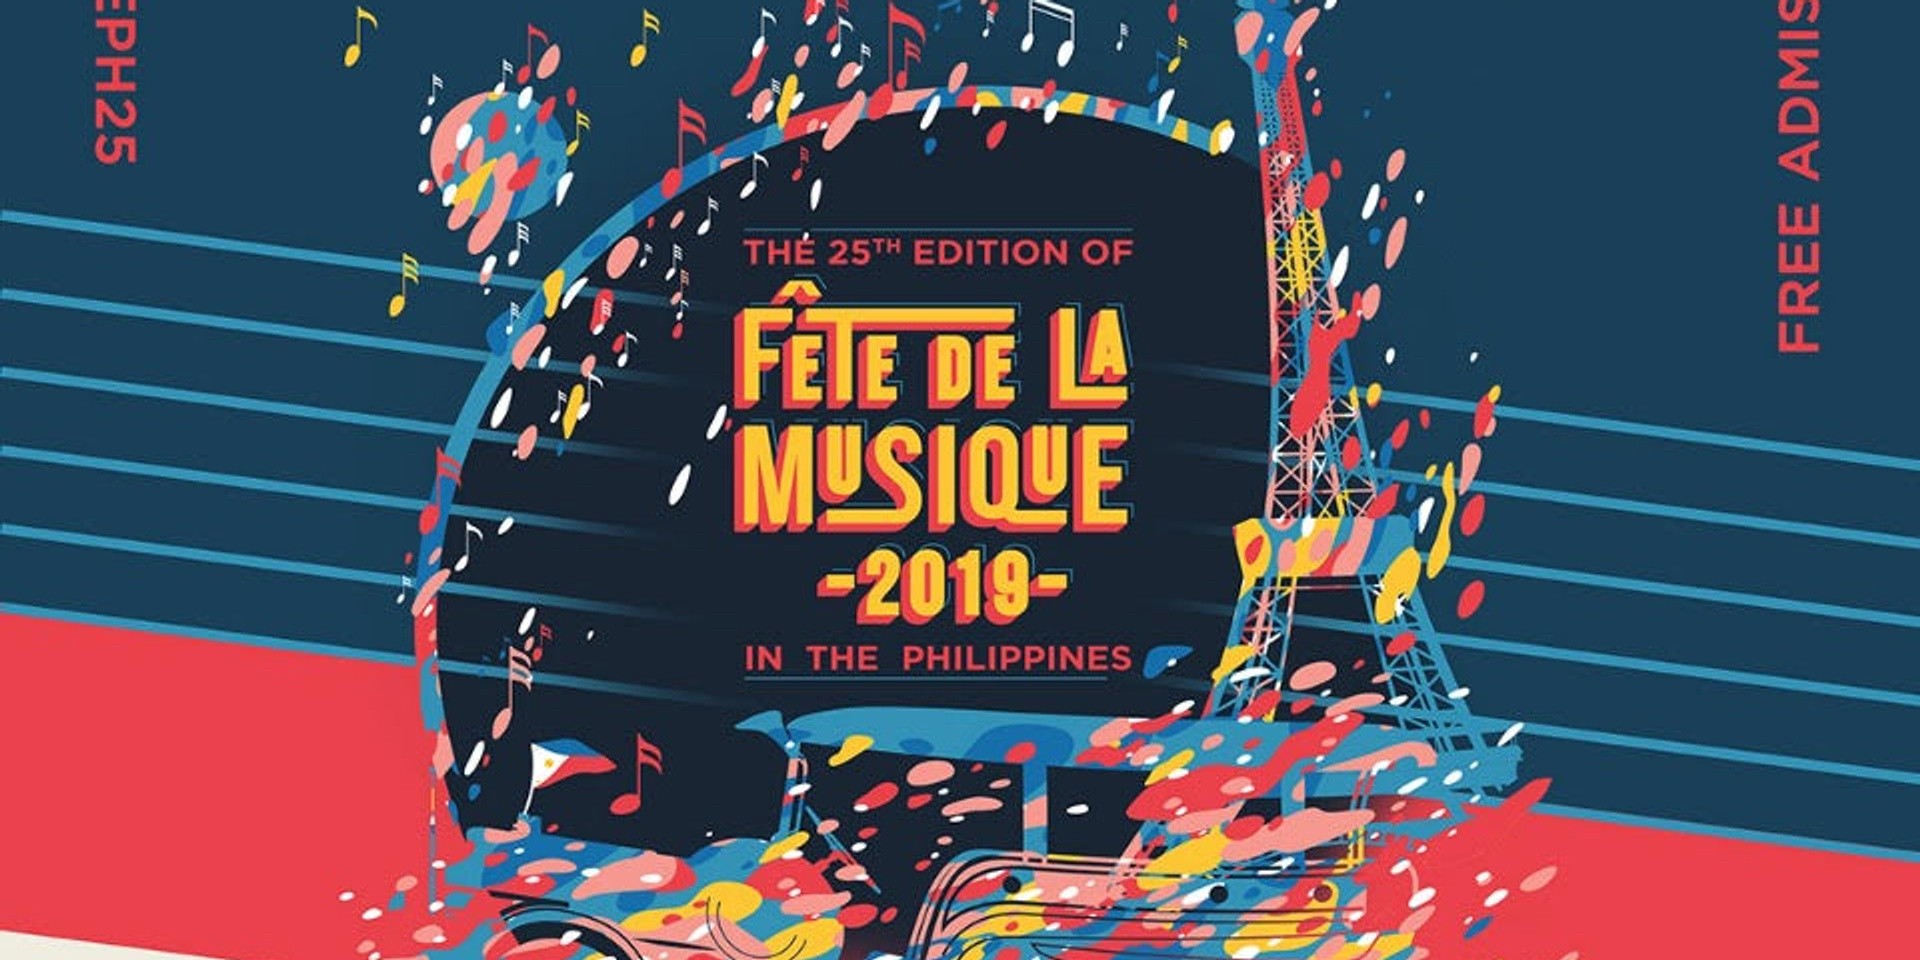 Fête de la Musique adds fourth date for its 25th anniversary